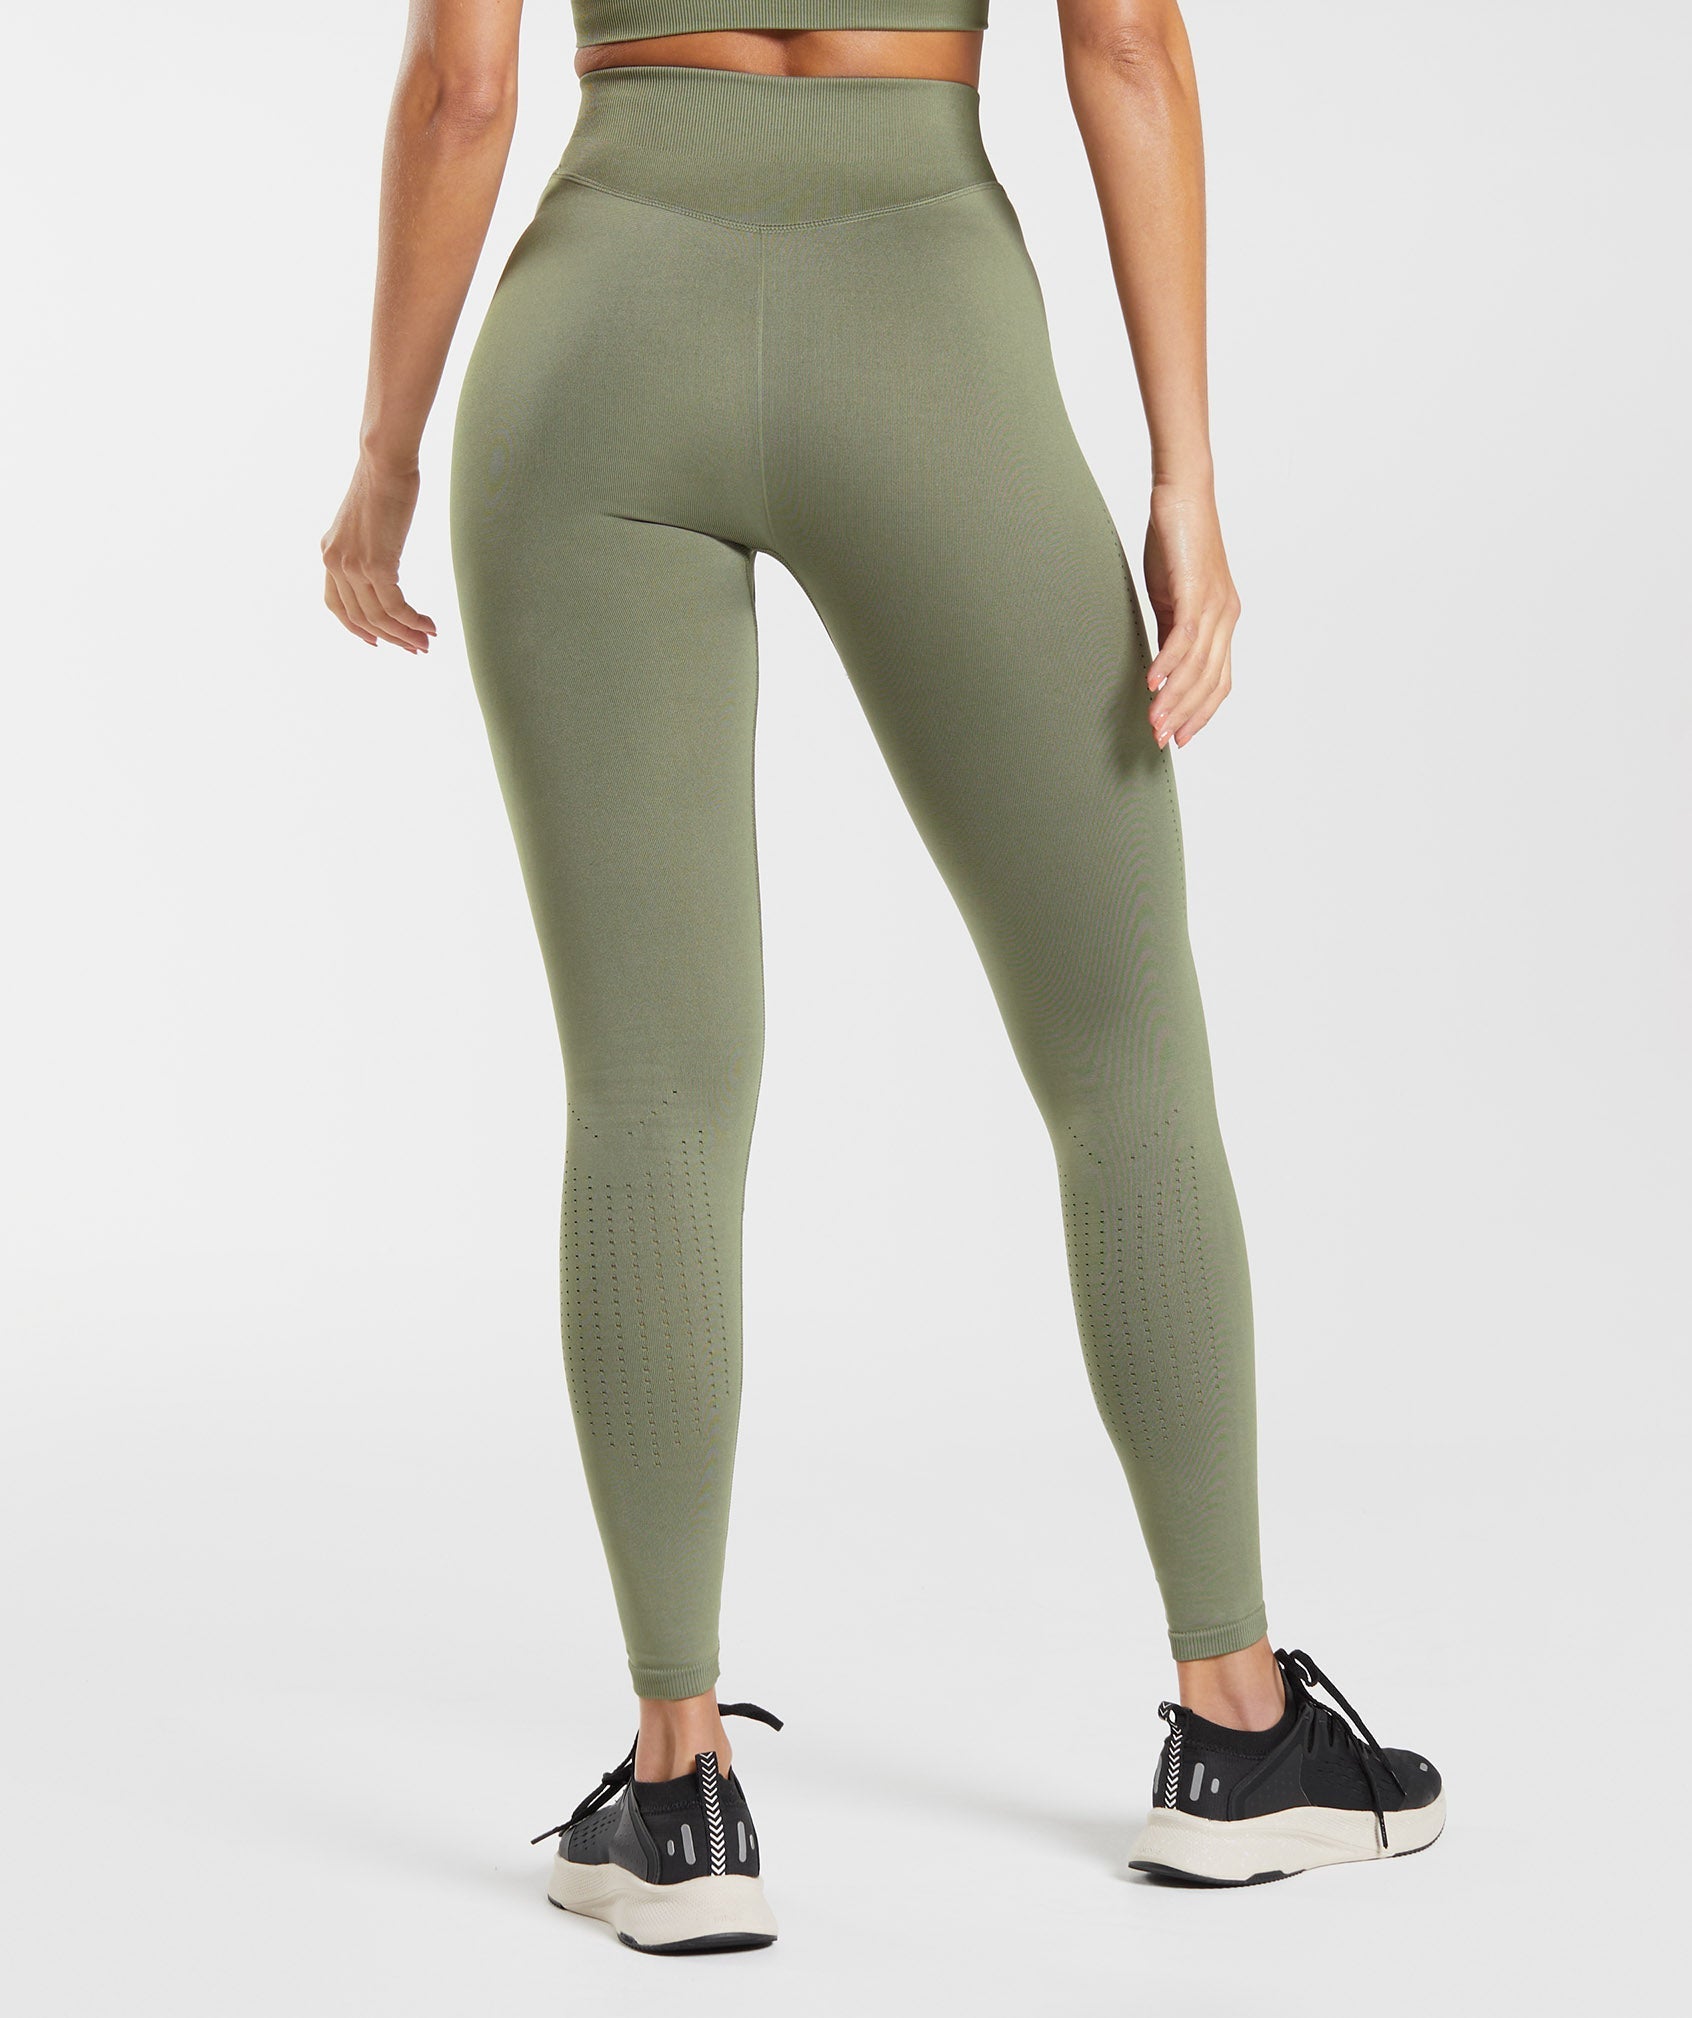 Melody Women High Waist Tights Workout Leggings Olive Green Leggings Sale  Yoga Pants for Women Scrunch Butt Leggings - AliExpress